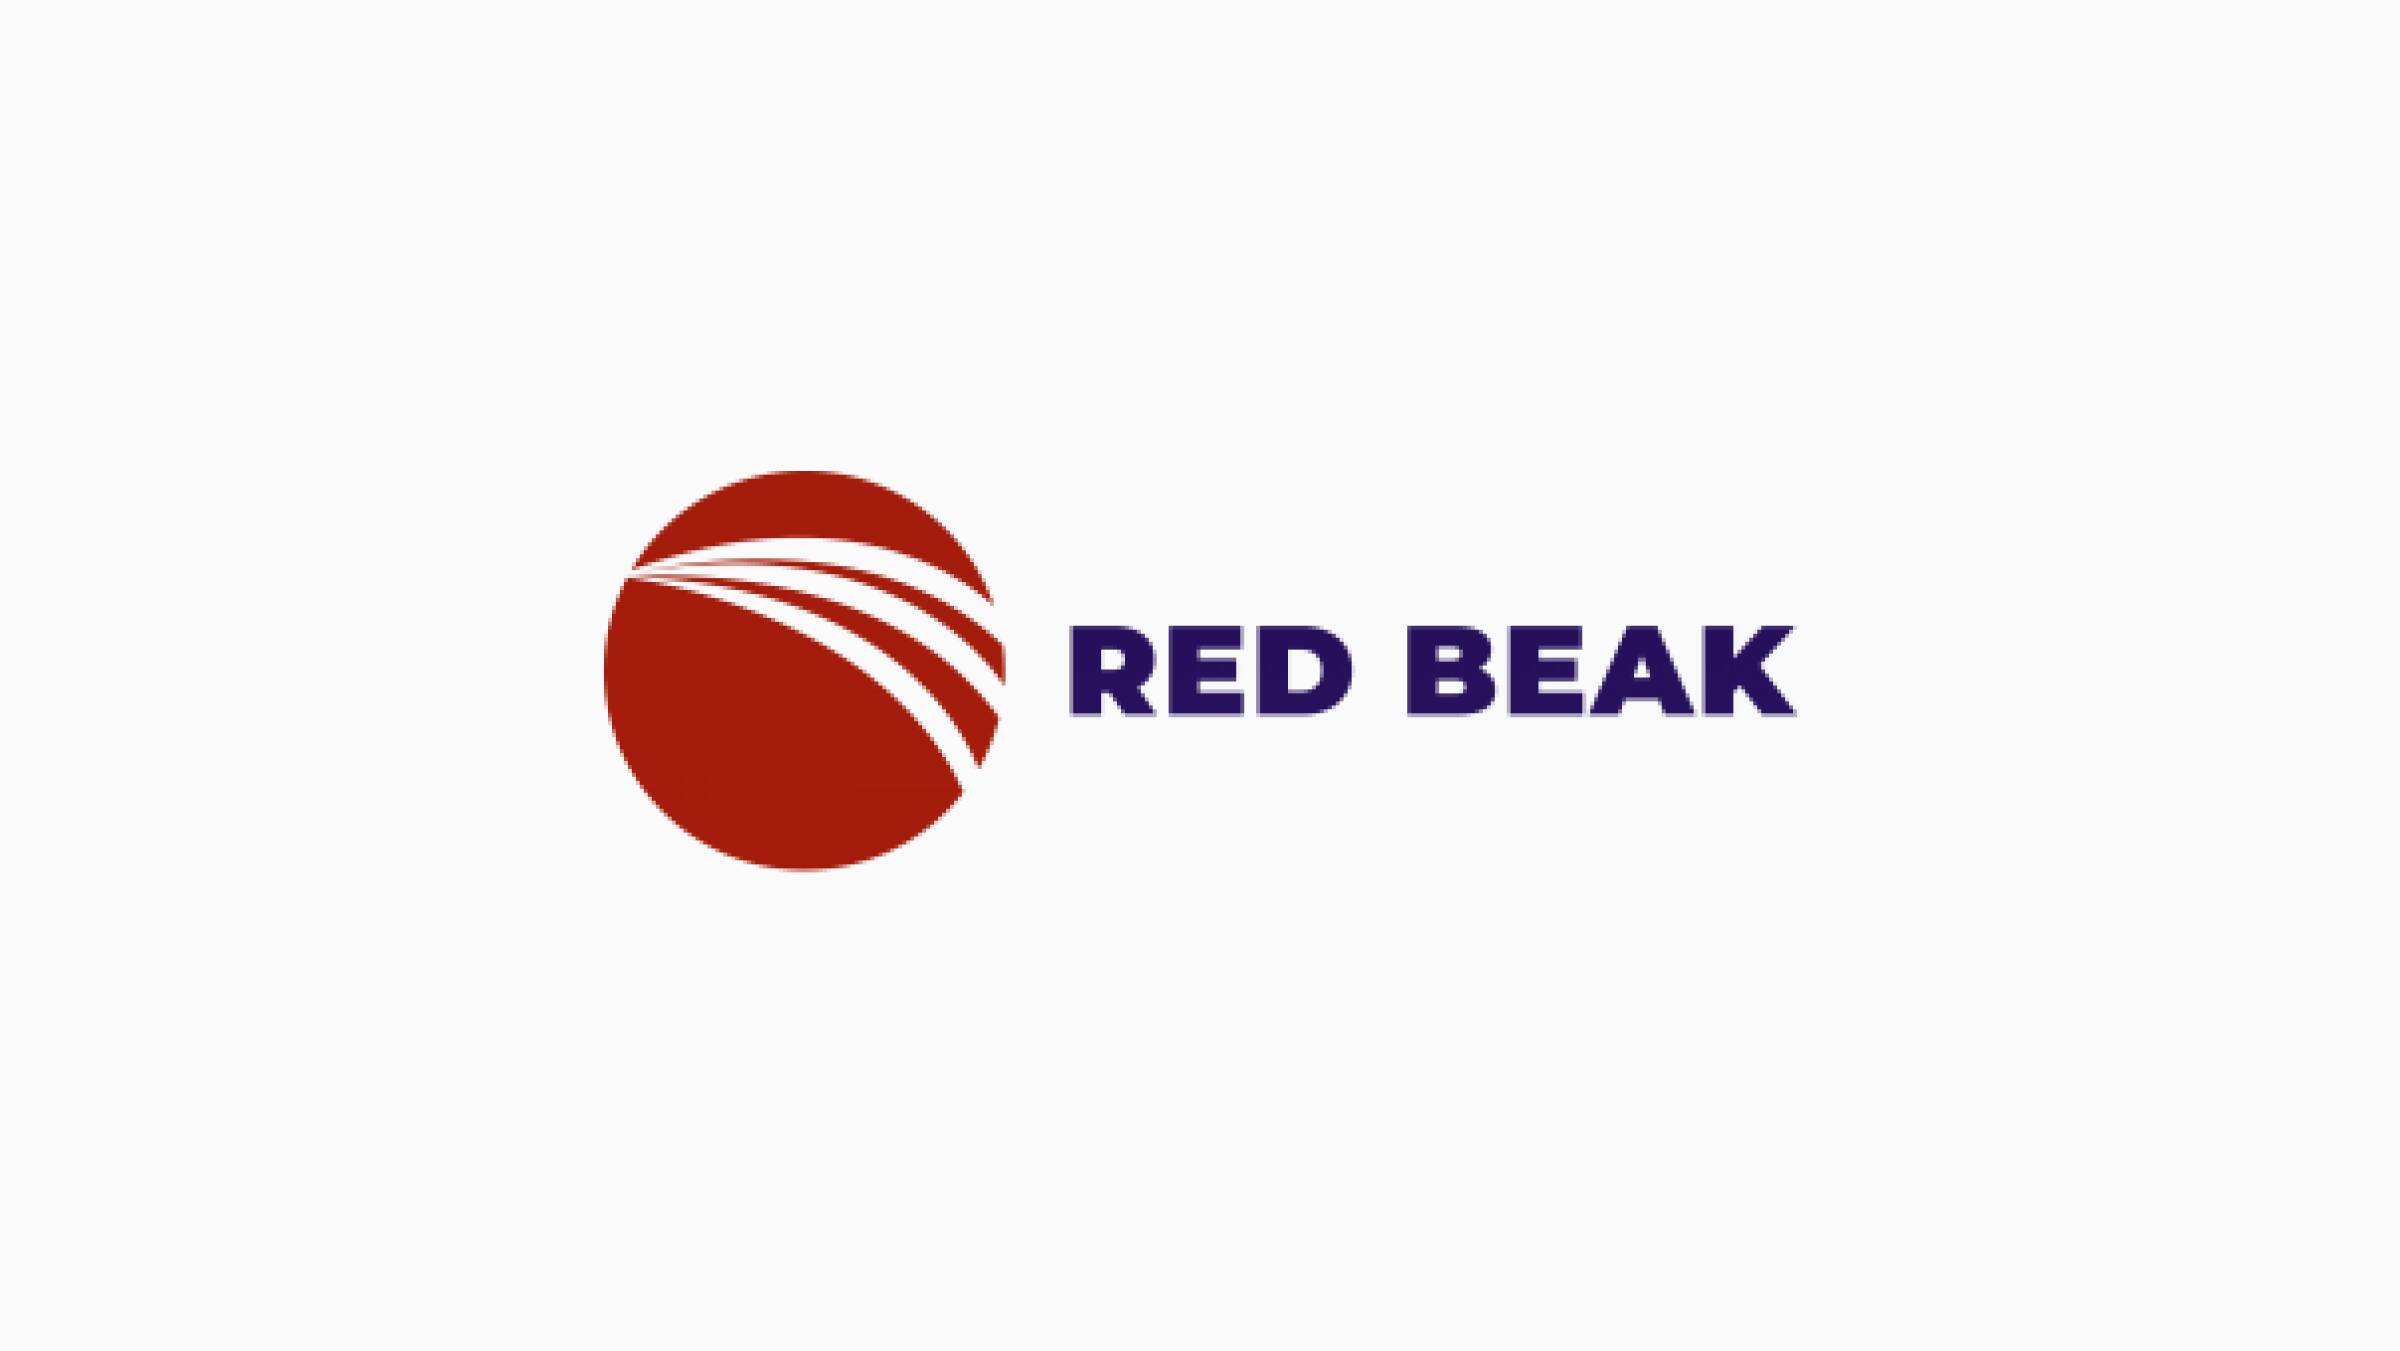 The Red Beak International logo